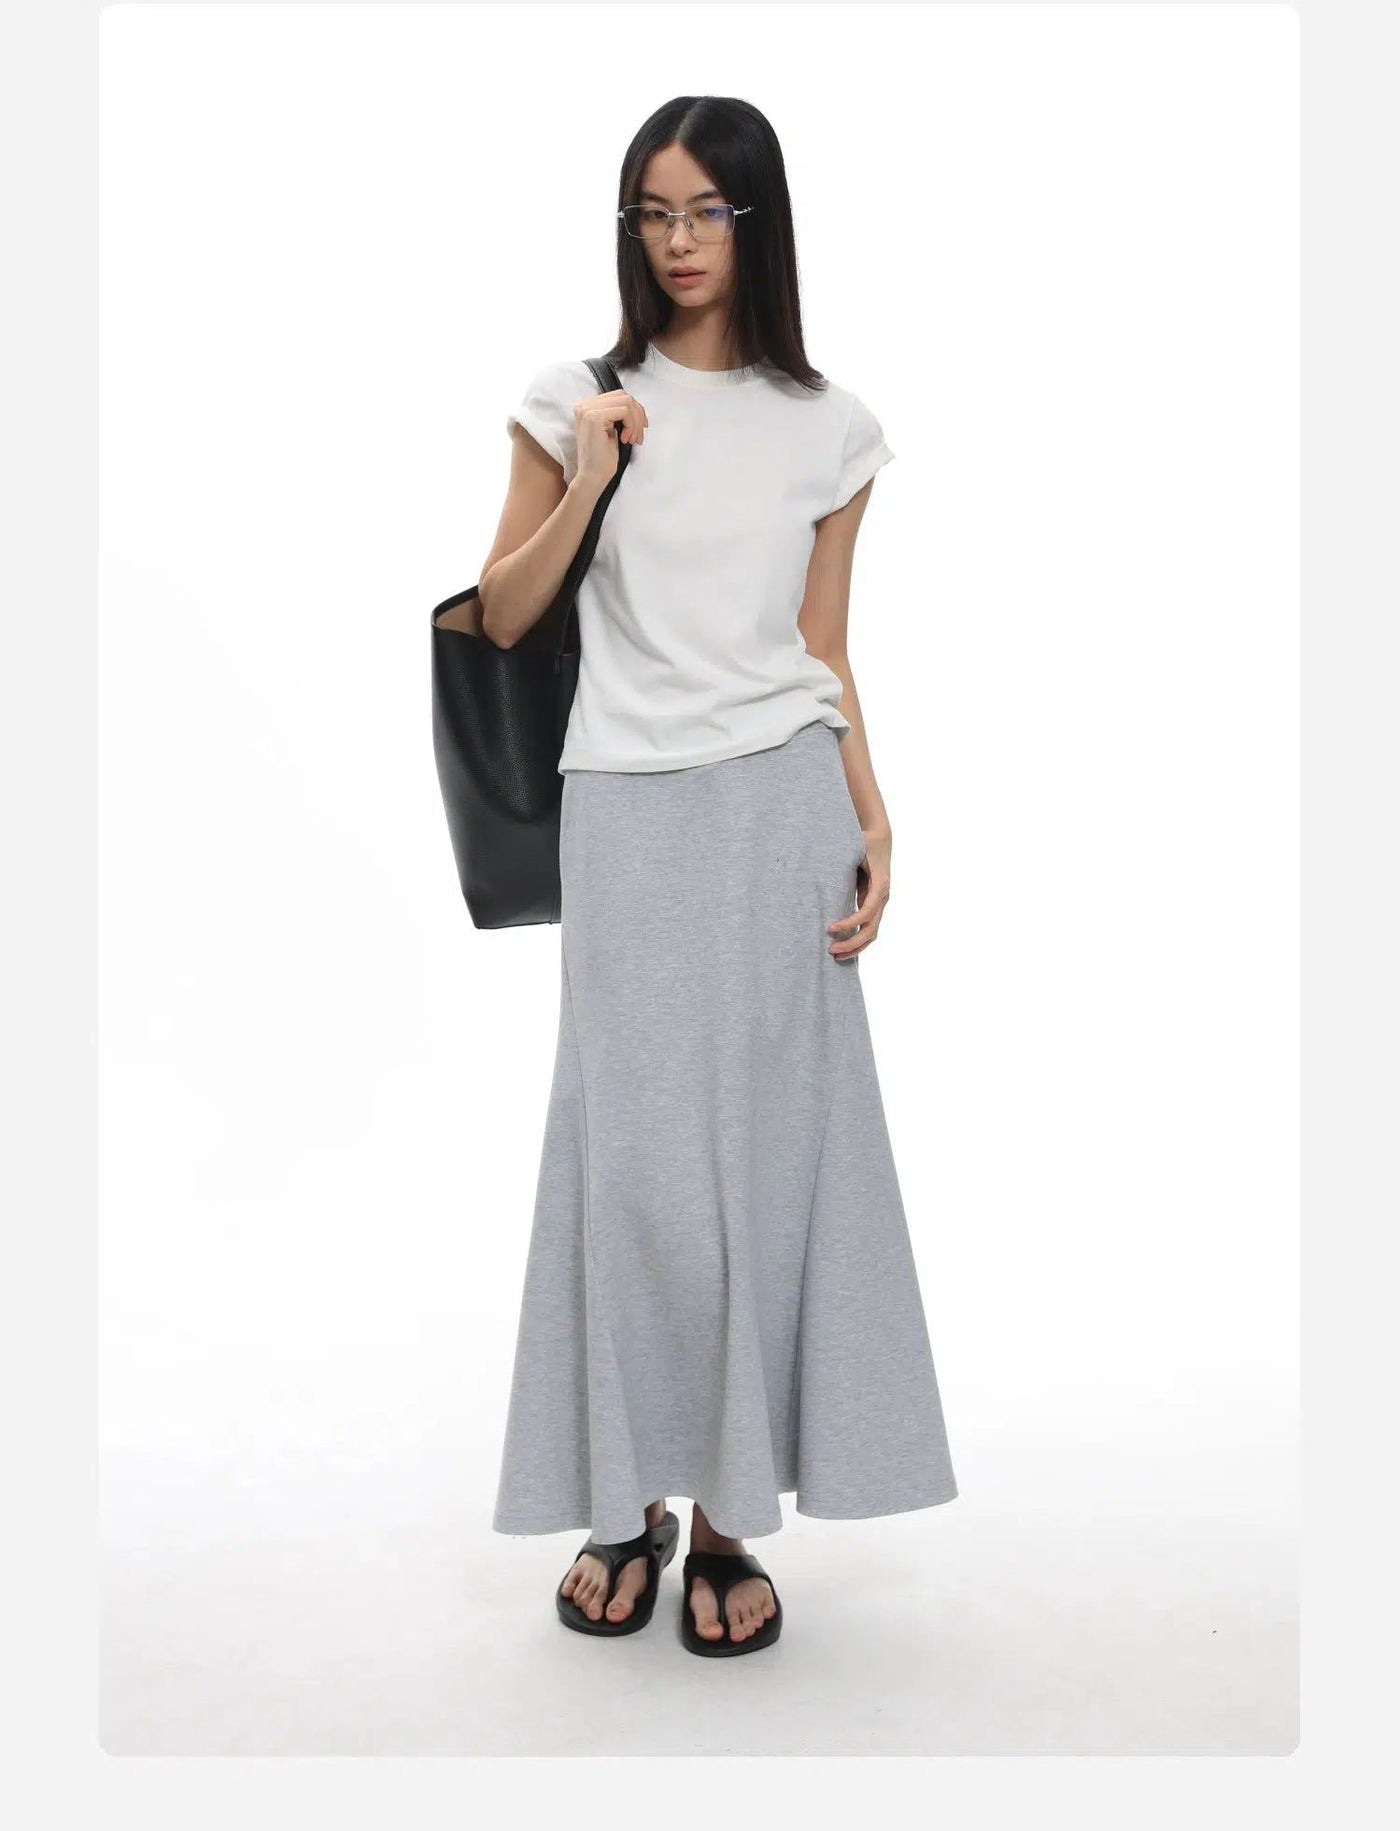 Subtle Flare Long Skirt Korean Street Fashion Skirt By Roaring Wild Shop Online at OH Vault